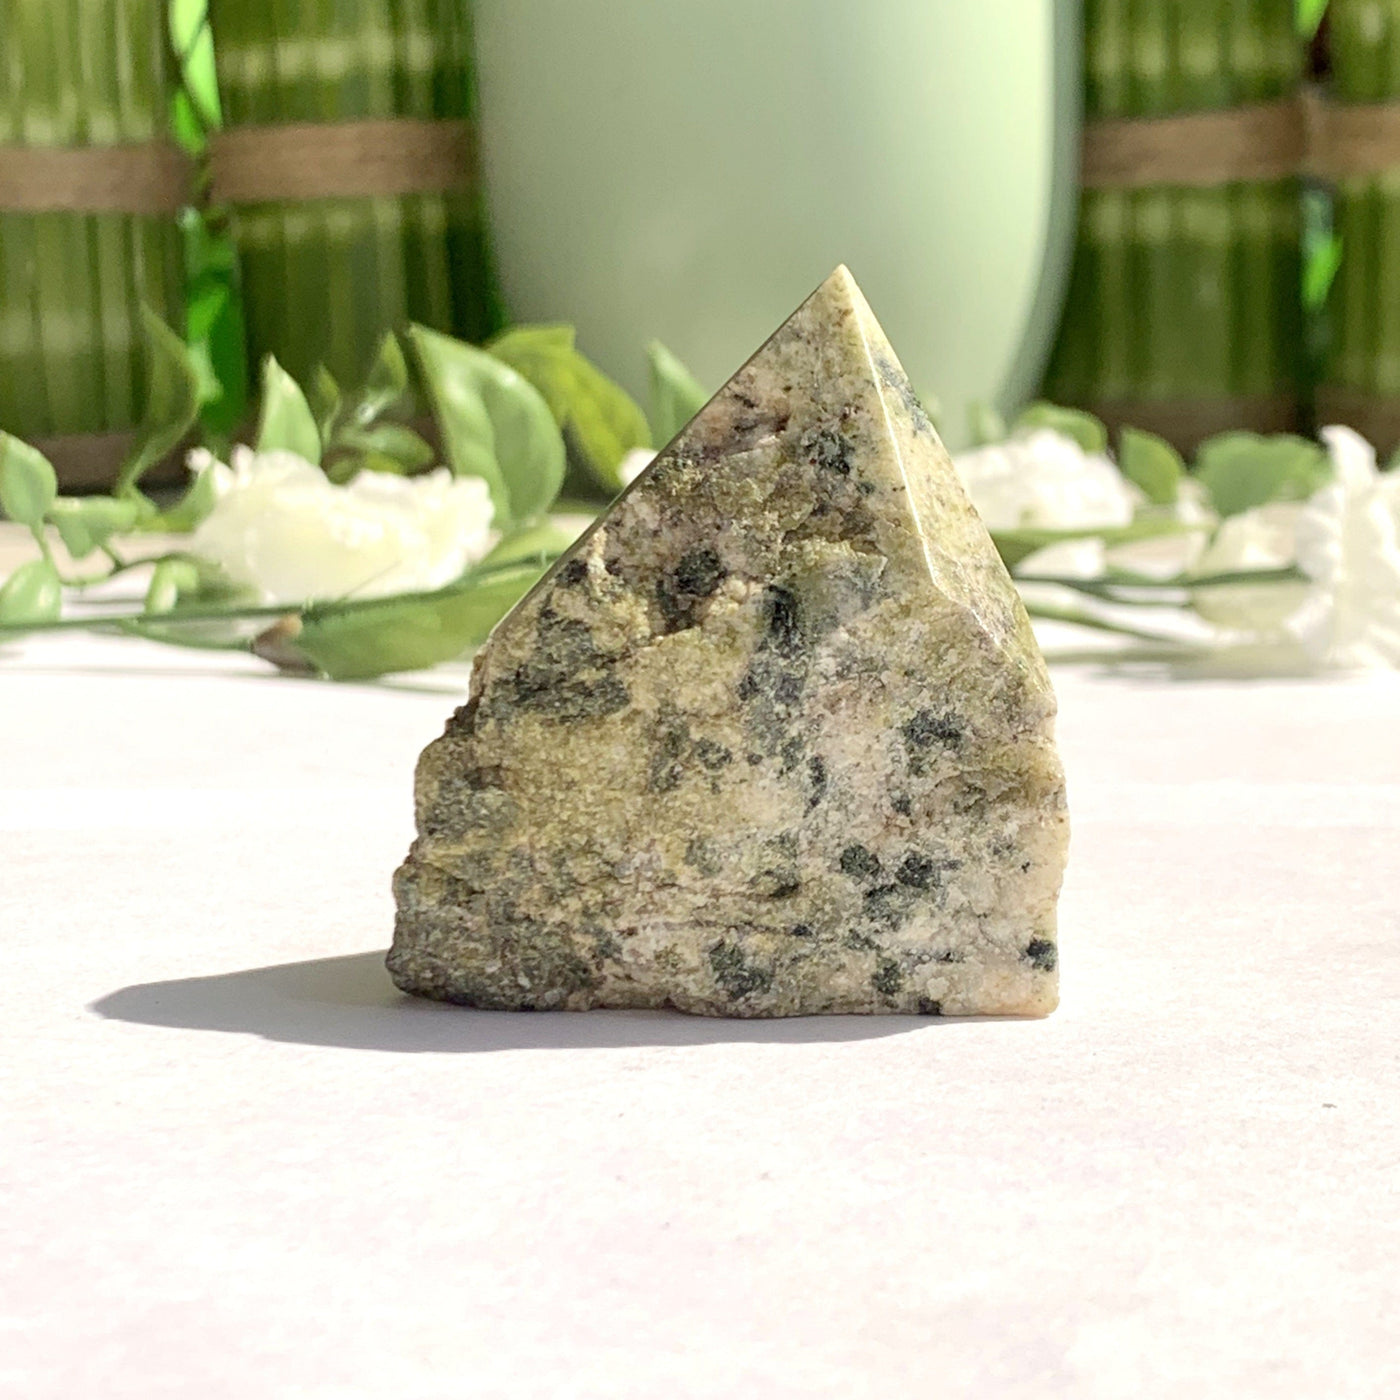 A close up of a small Jadeite